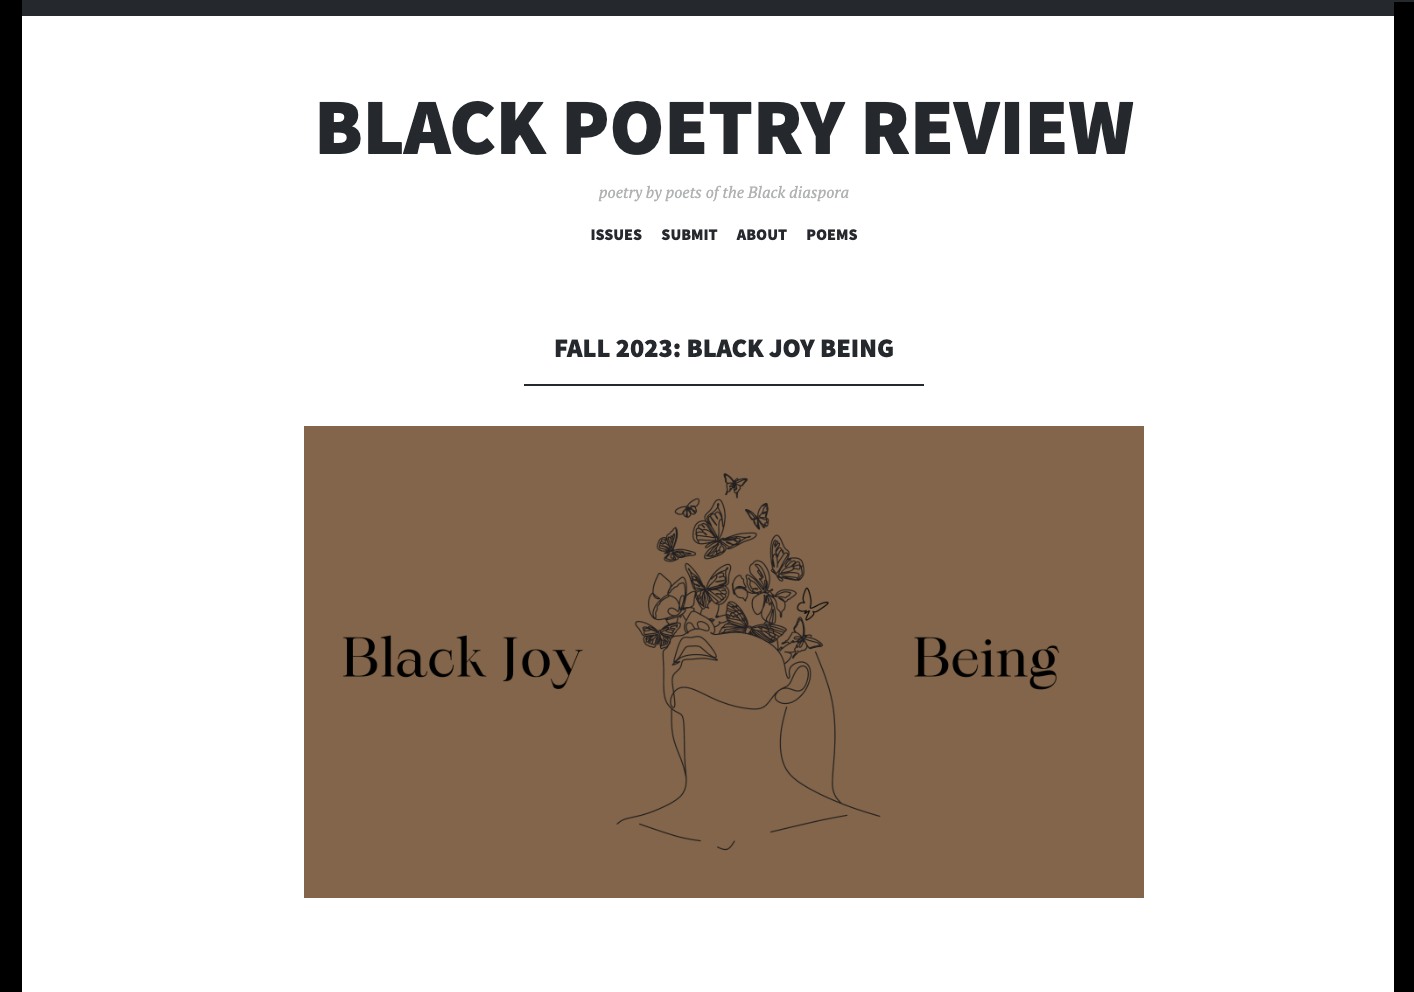 Screensgot of Black Poetry Review Website